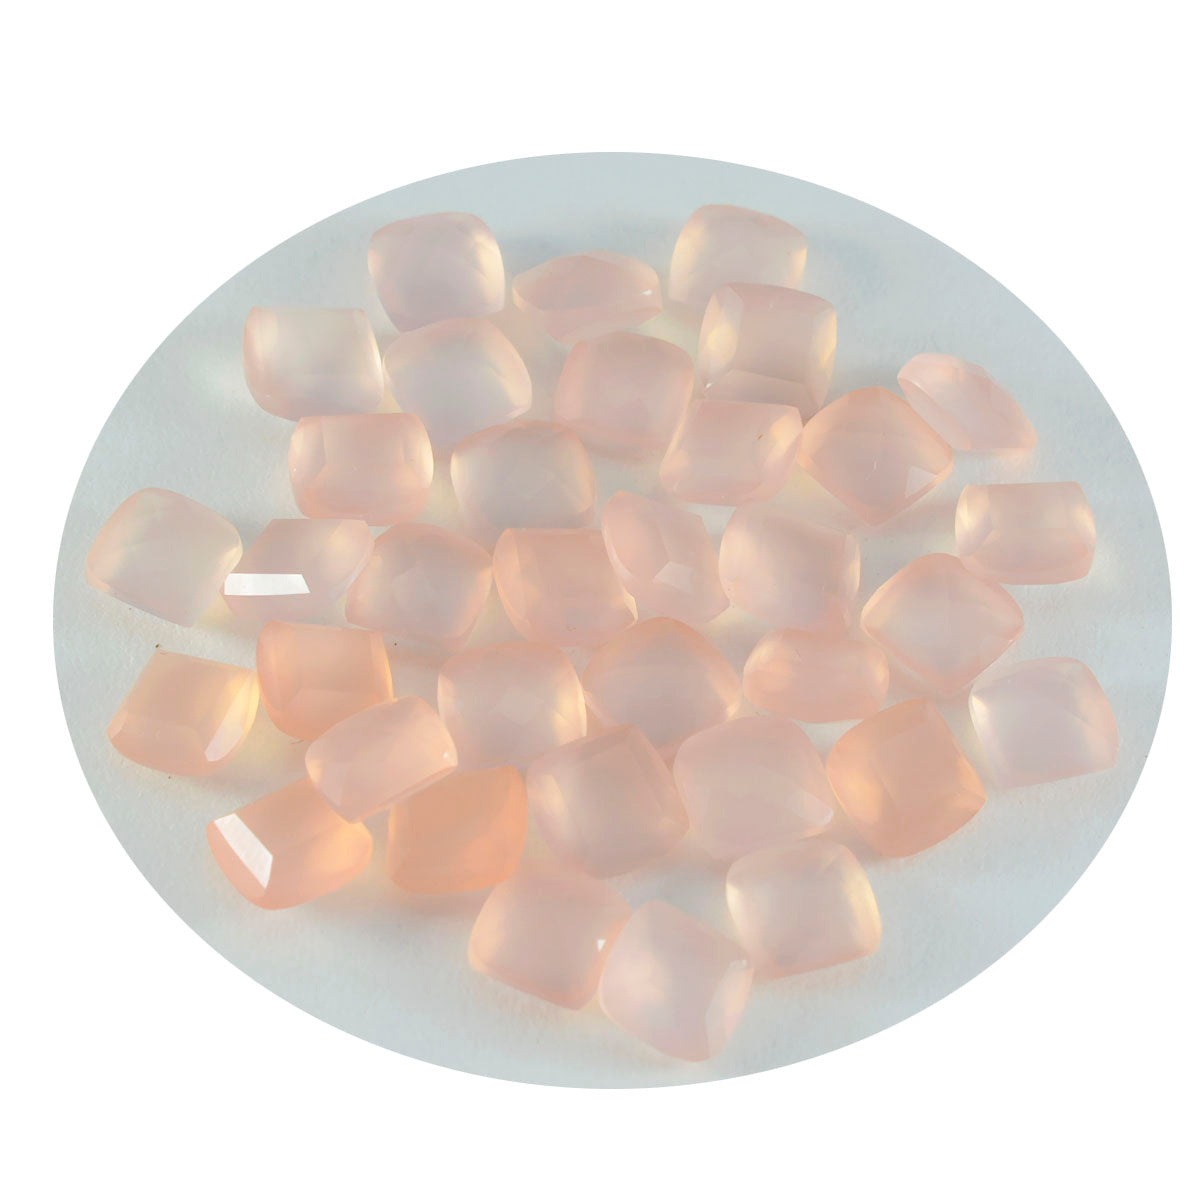 Riyogems 1PC roze rozenkwarts gefacetteerd 8x8 mm kussenvorm uitstekende kwaliteit edelsteen